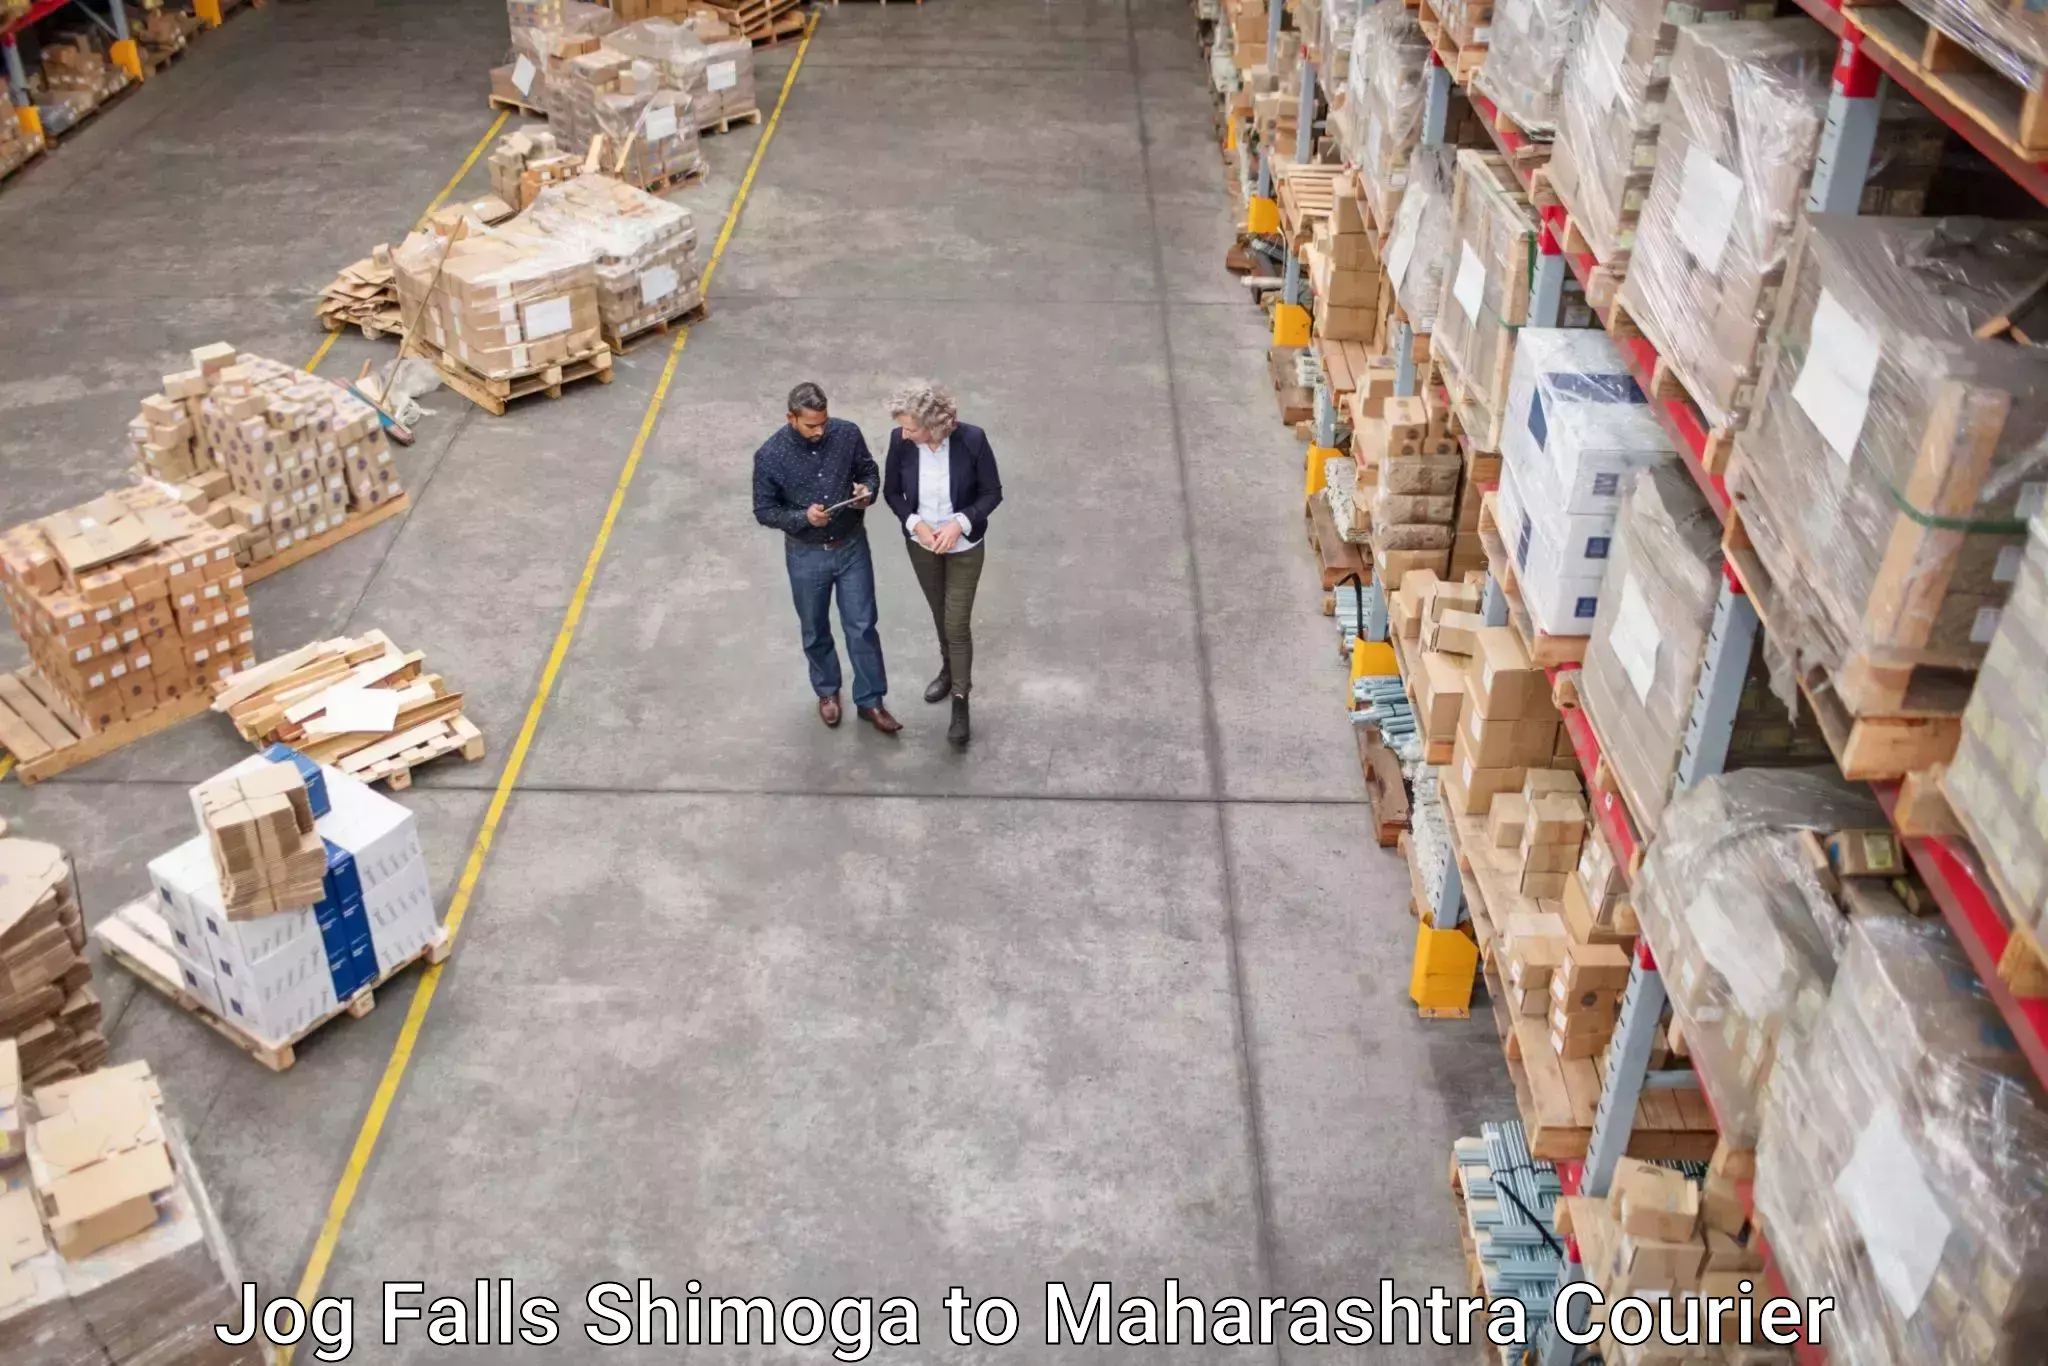 Overnight delivery services Jog Falls Shimoga to Symbiosis International Pune